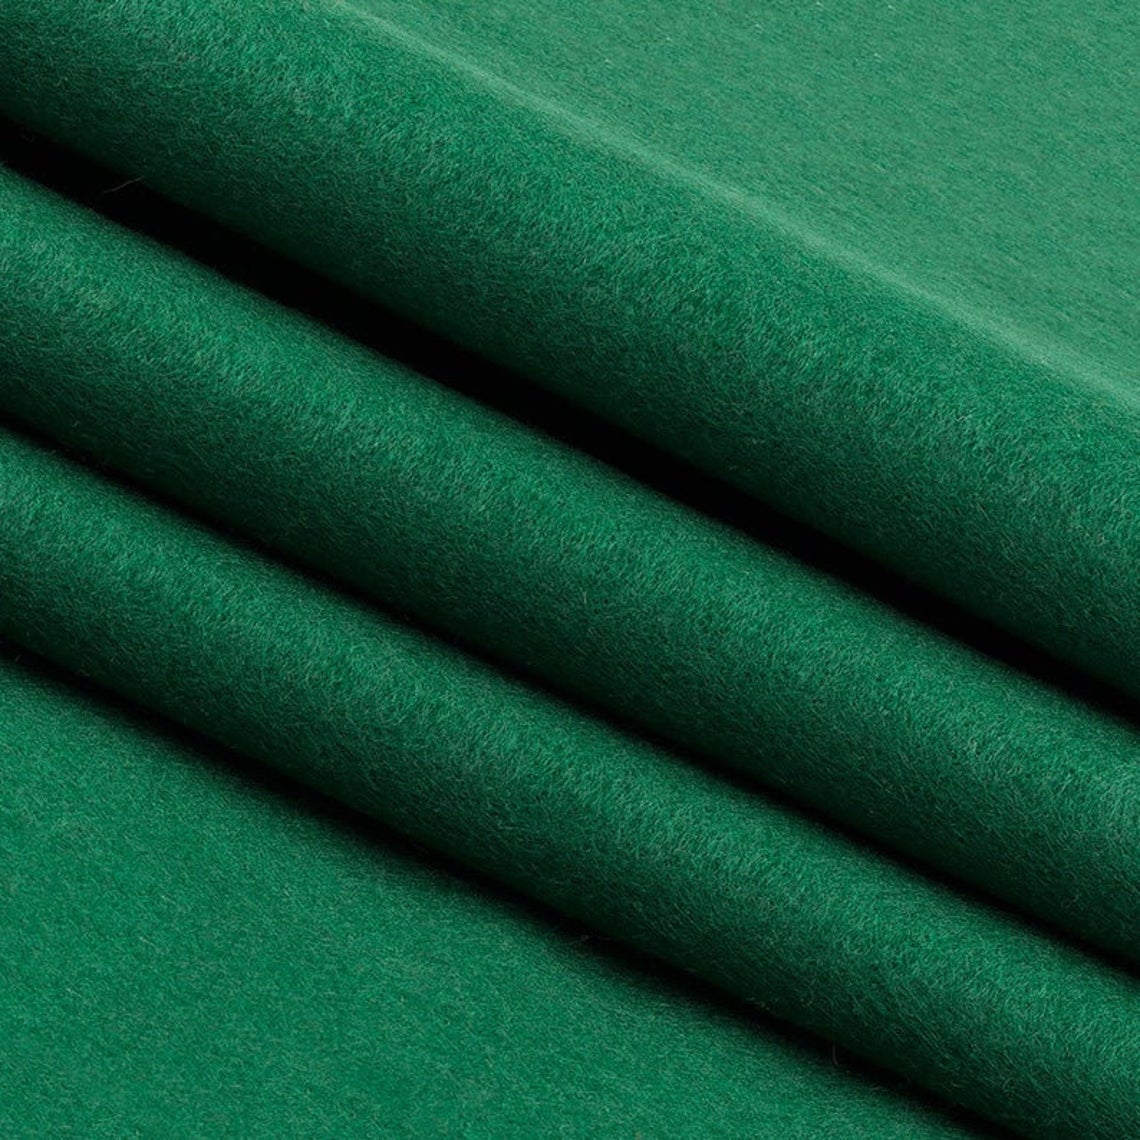 Acrylic Felt Fabric By The Roll | 20 yards | Wholesale Fabric ICE FABRICS Kelly Green